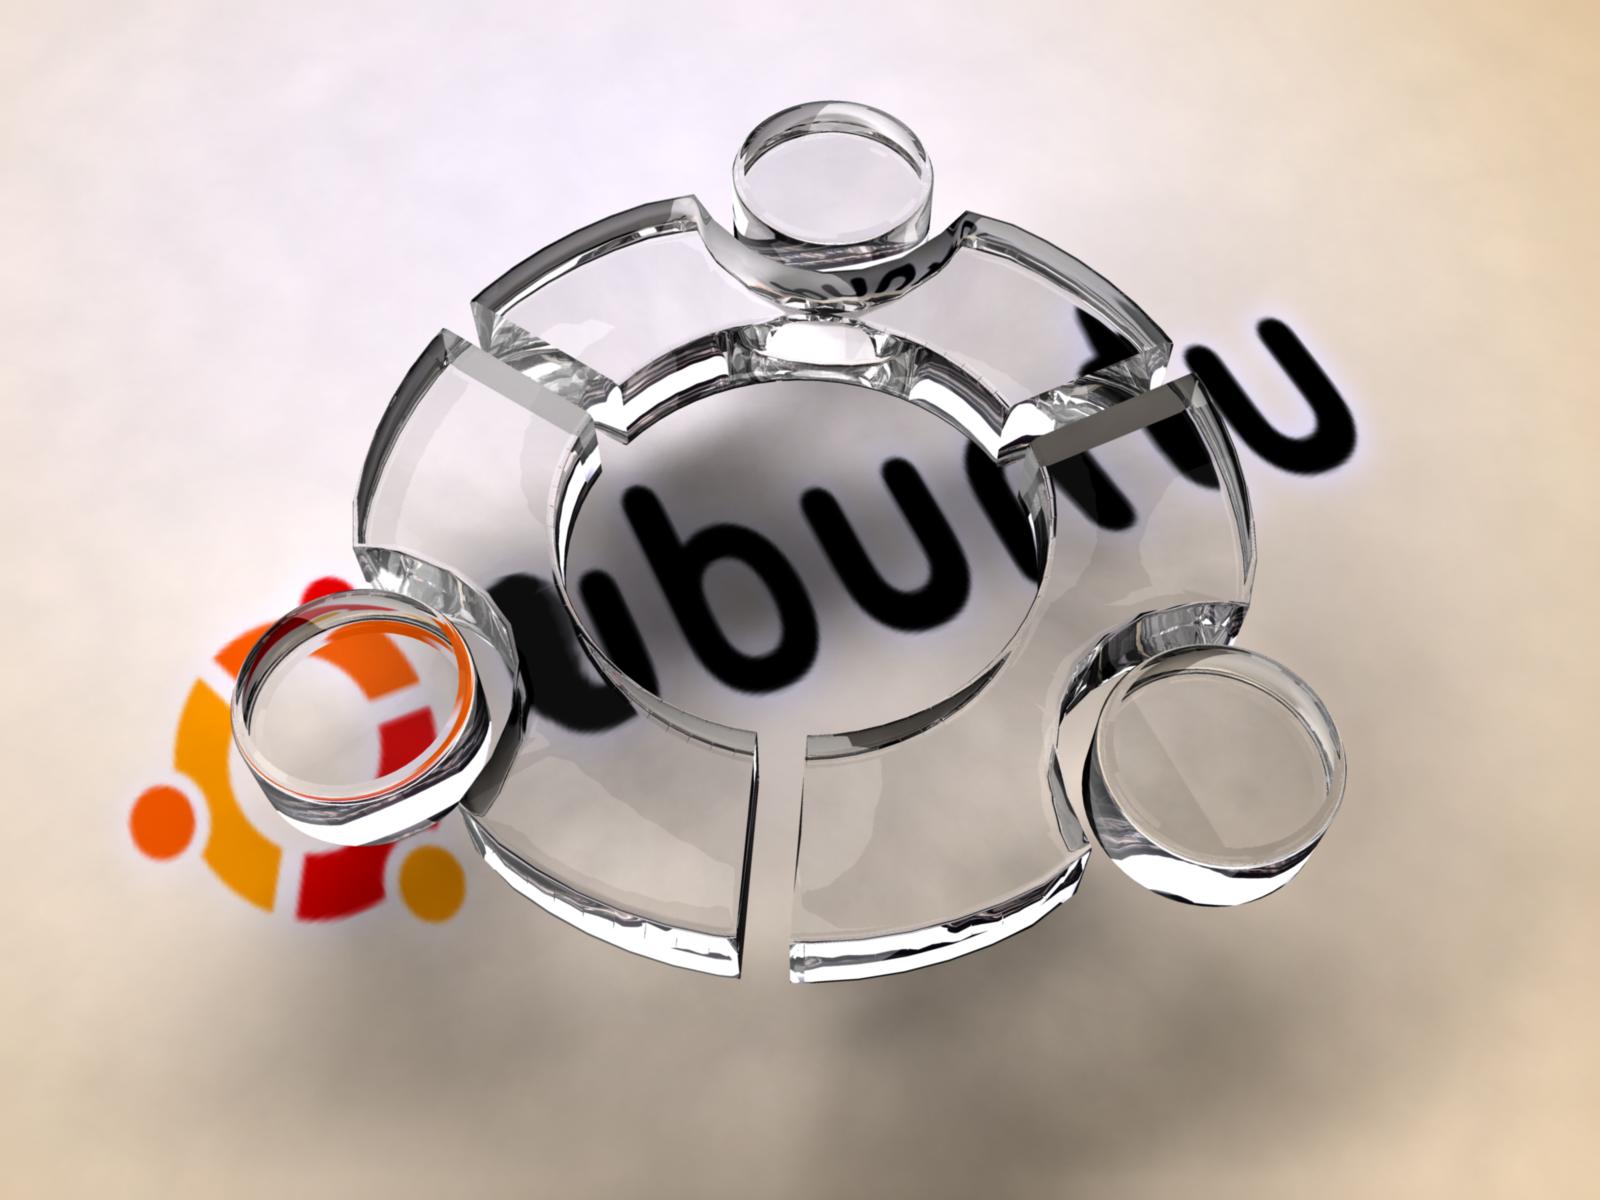 http://2.bp.blogspot.com/-vkohx1-mQRw/TVS90fj3yzI/AAAAAAAAAOo/cJCm_iot_J0/s1600/ubuntu_logo_hd_wallpaper.jpg